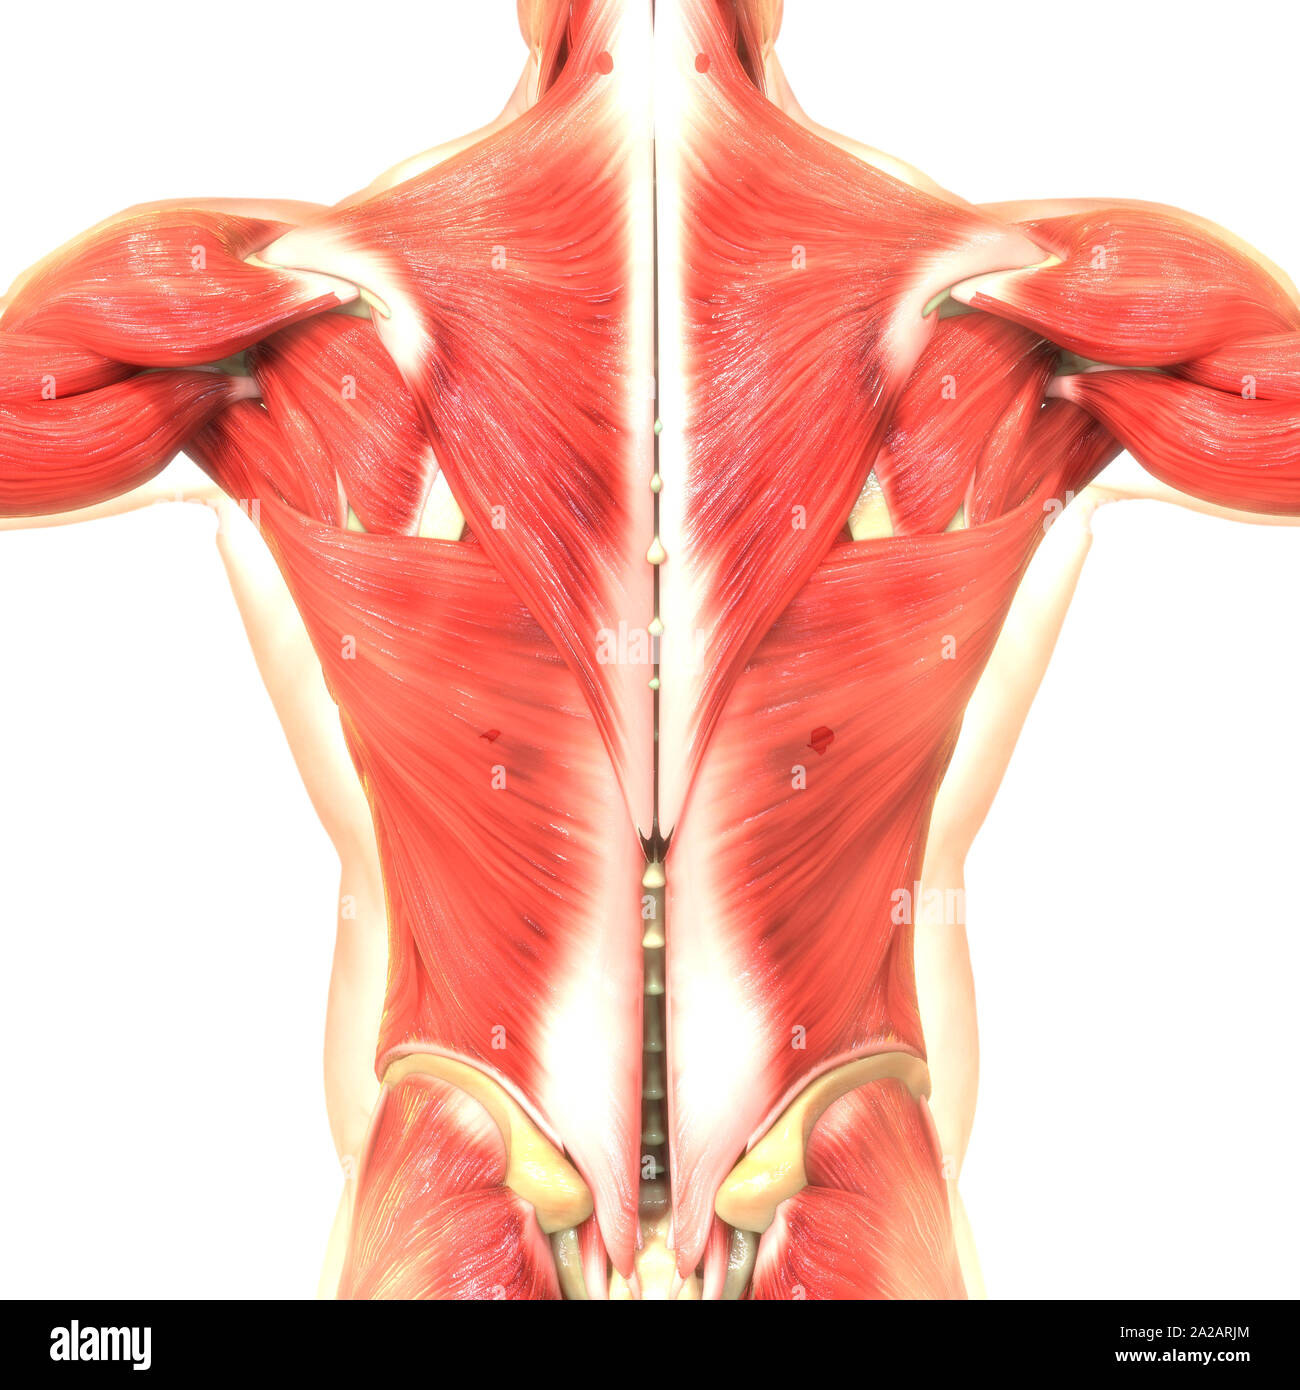 Human Body Muscular System Anatomy Stock Photo